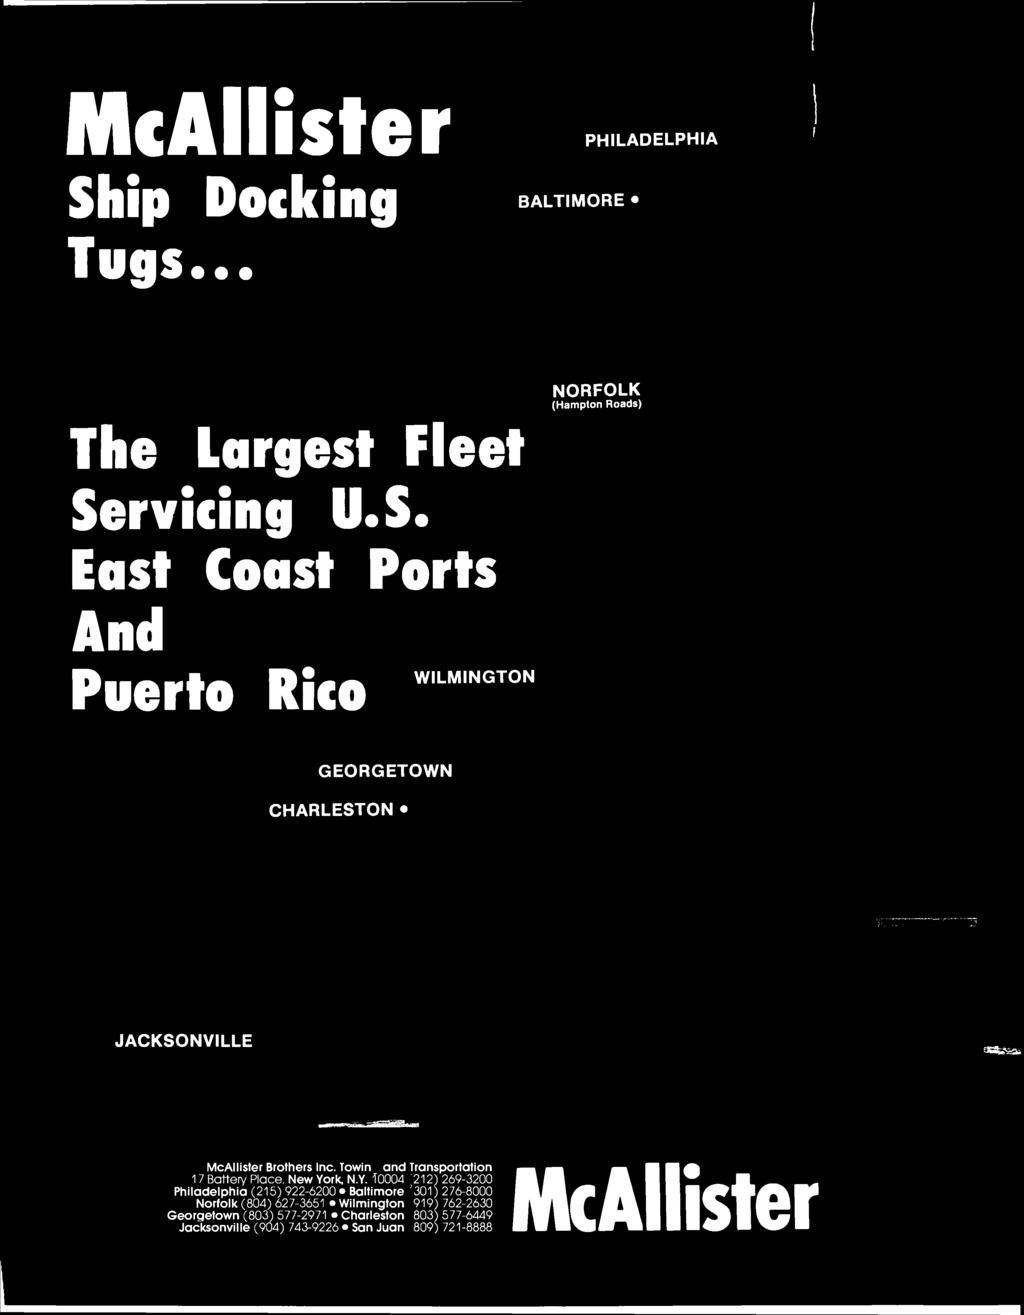 McAllister Ship Docking Tugs... BALTIMORE PHILADELPHIA NORFOLK (Hampton Roads) The Largest Fleet Servicing U.S. East Coast Ports And Puerto Rico WILMINGTON GEORGETOWN CHARLESTON JACKSONVILLE ssjbsai McAllister Brothers Inc.